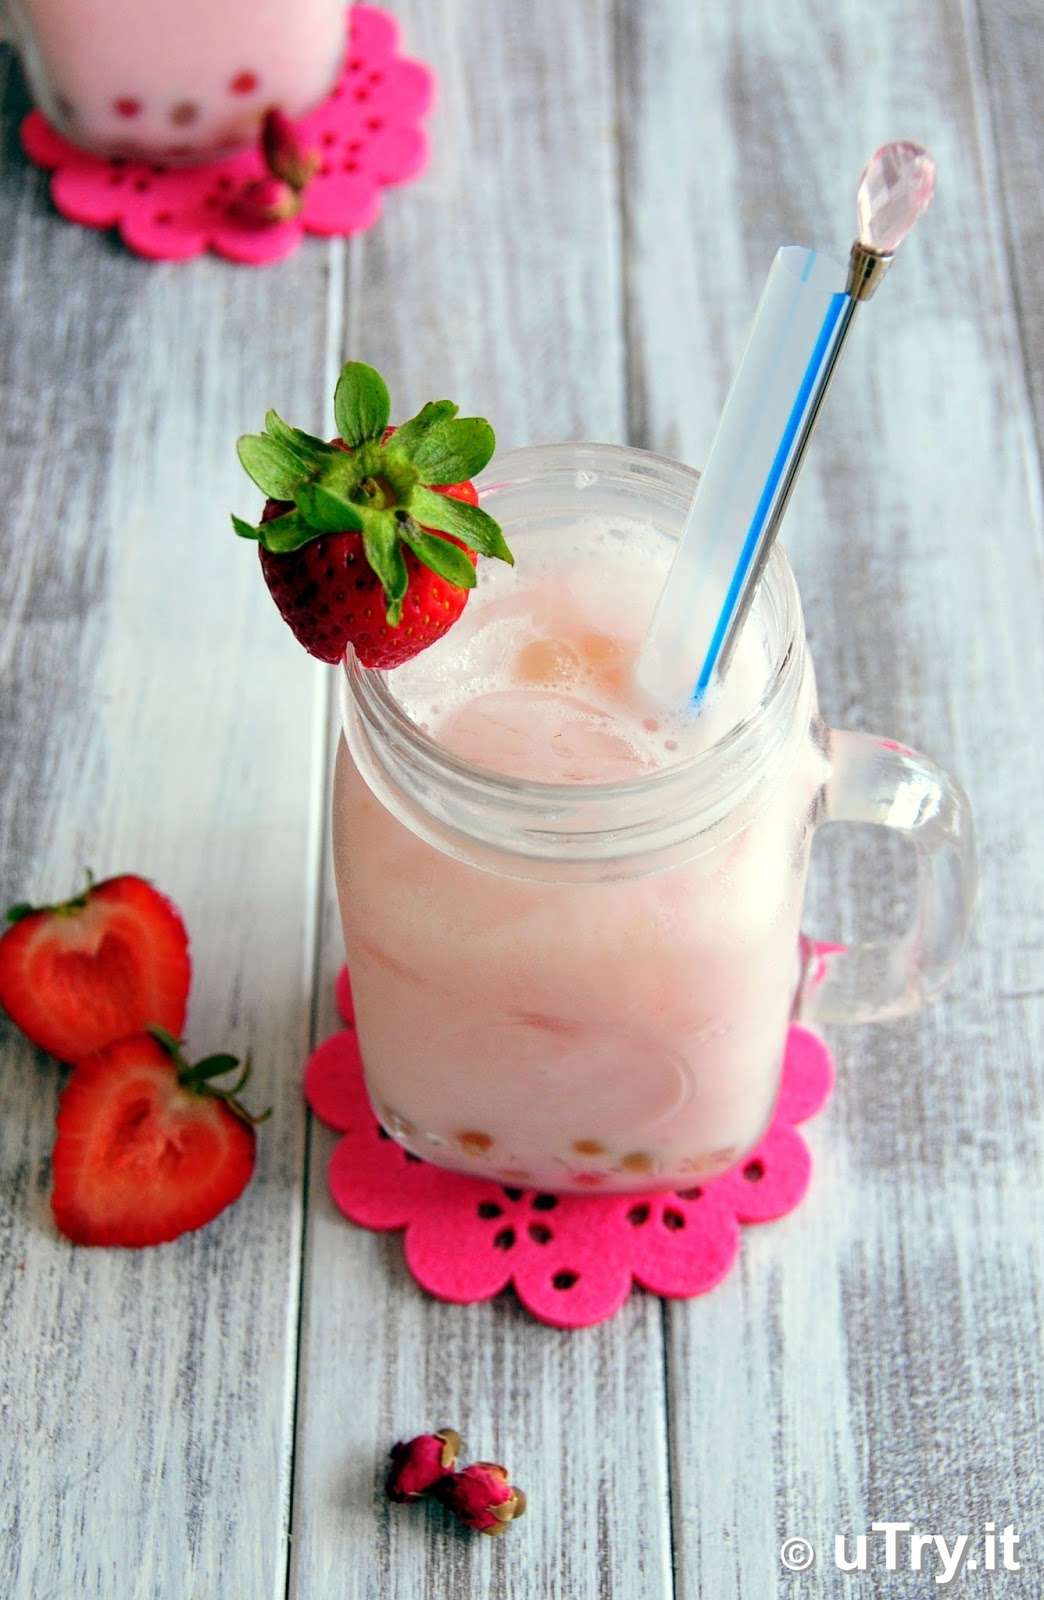 uTry.it: Strawberry Rose Milk Tea with Rainbow Boba